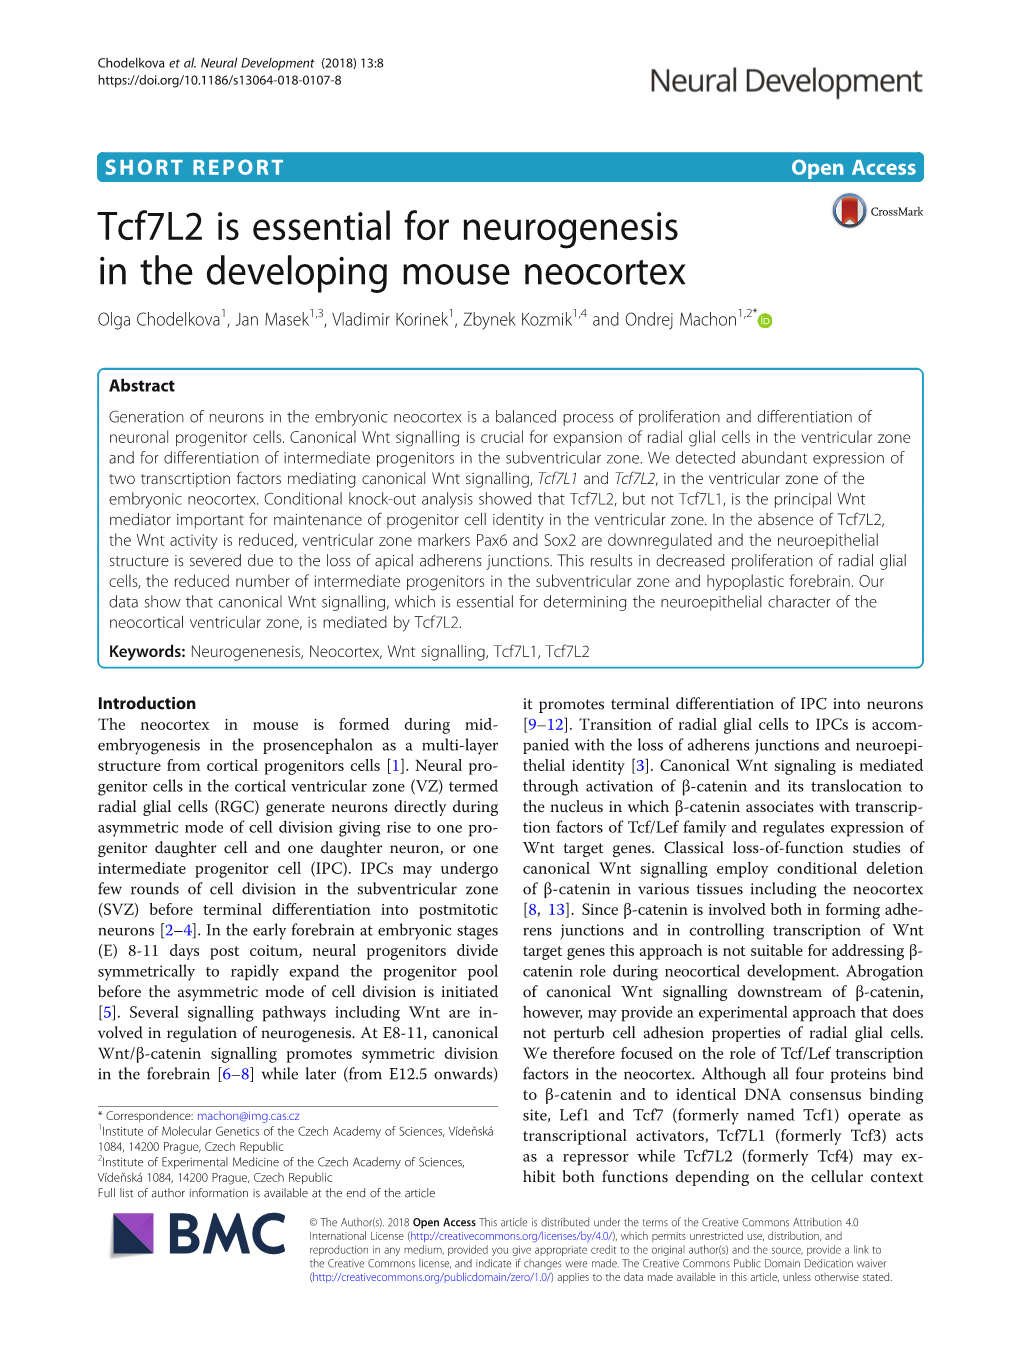 Tcf7l2 Is Essential for Neurogenesis in the Developing Mouse Neocortex Olga Chodelkova1, Jan Masek1,3, Vladimir Korinek1, Zbynek Kozmik1,4 and Ondrej Machon1,2*